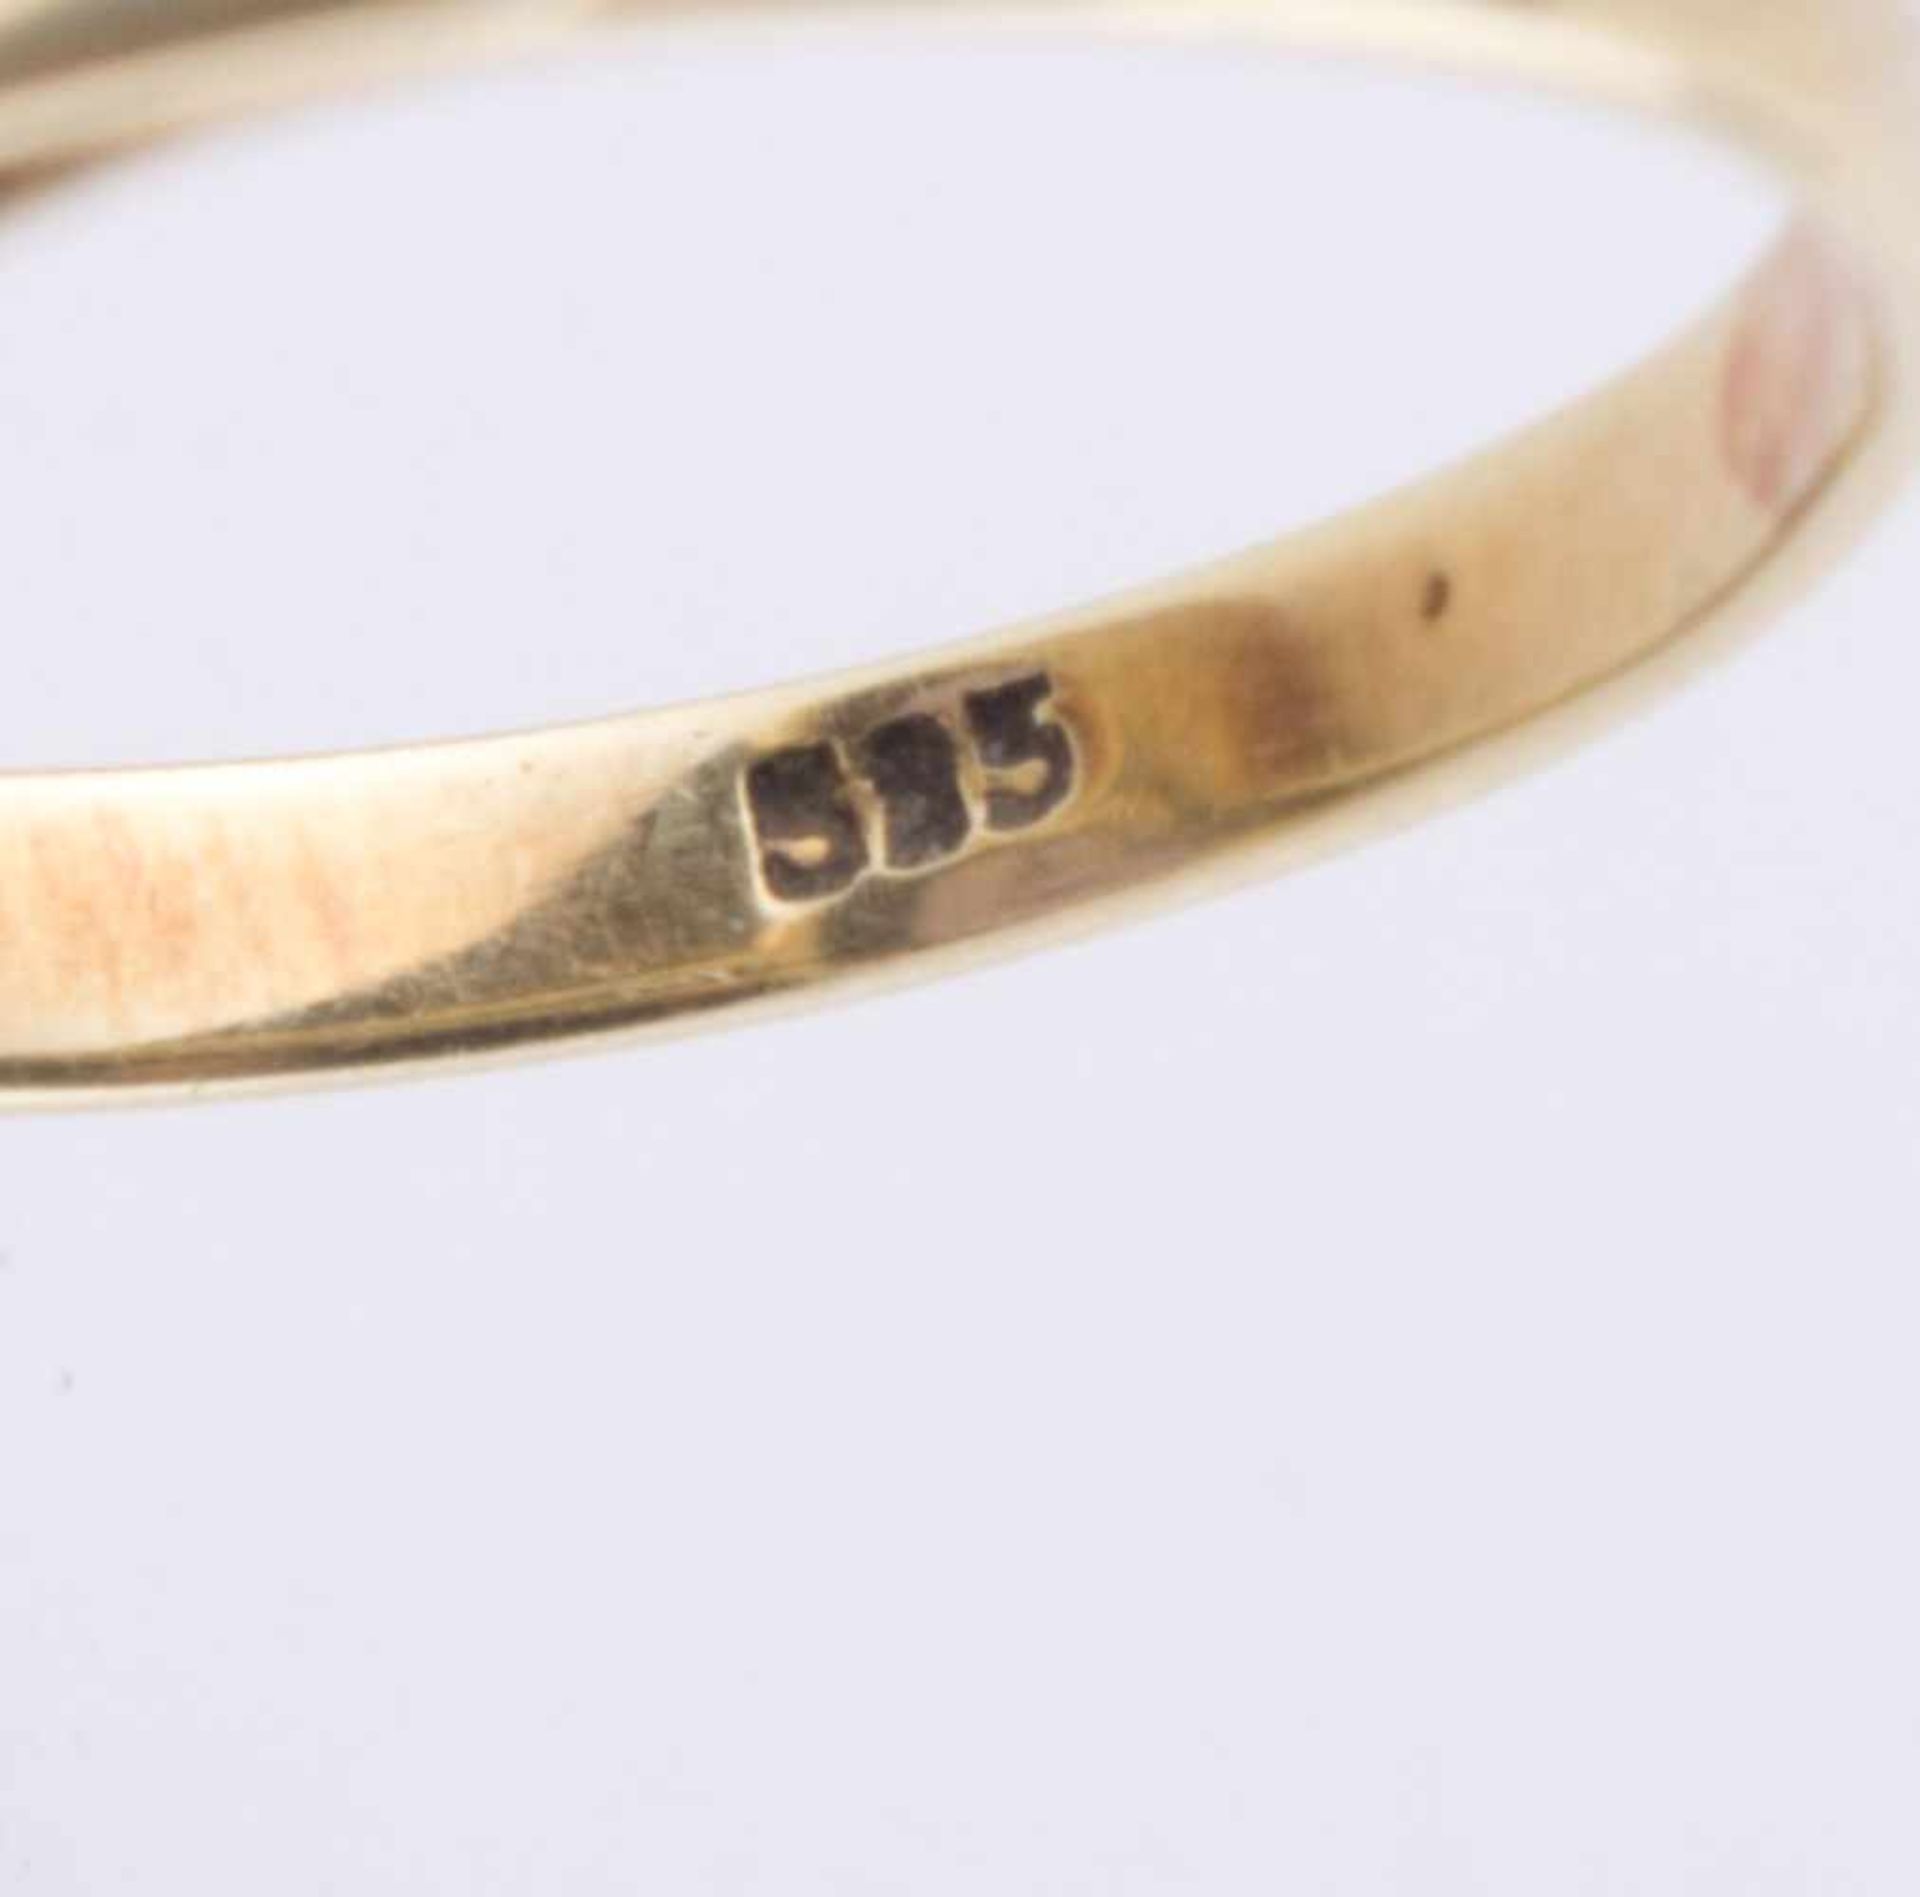 Damen Amethystring / Women's amethyst gold ring GG 585/000, RG ca. 58, Gesamtgewicht ca. 6 g. - Bild 11 aus 12